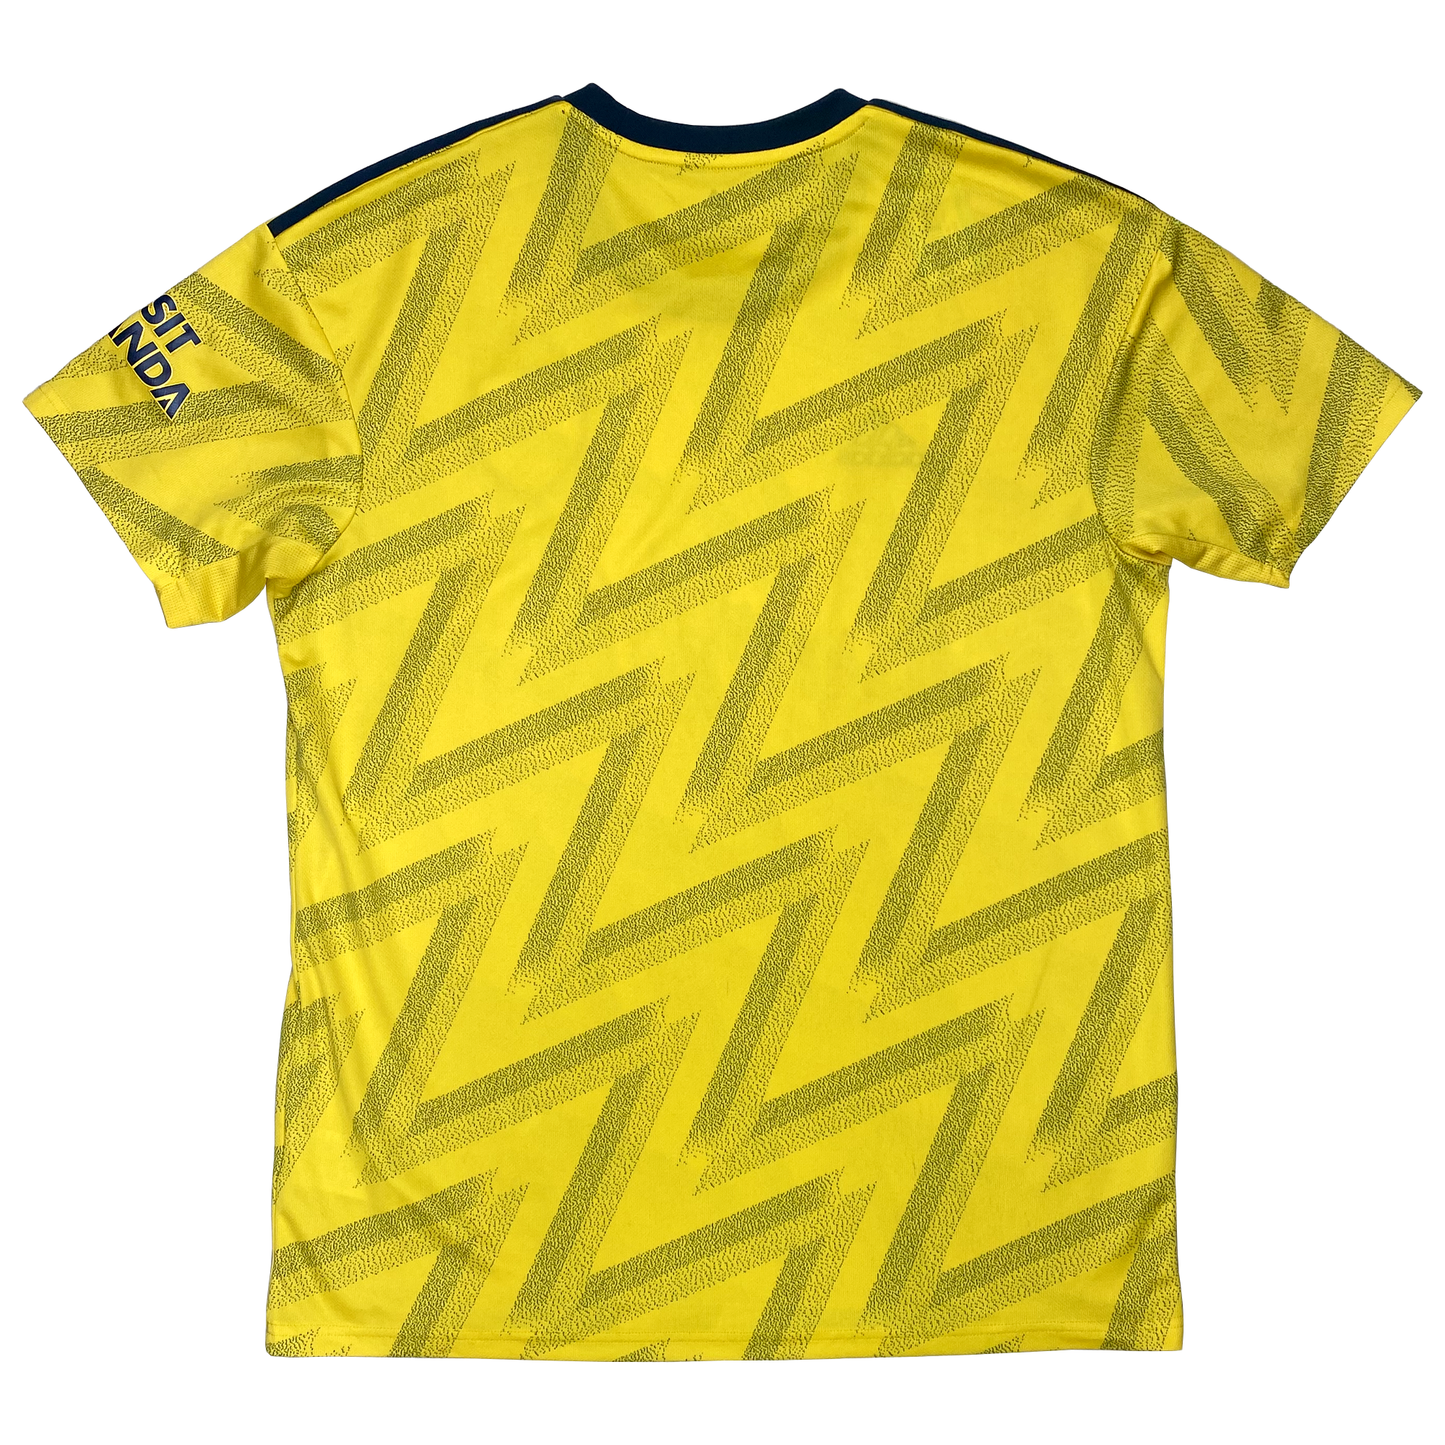 Arsenal Away Shirt (2019-20) | Large